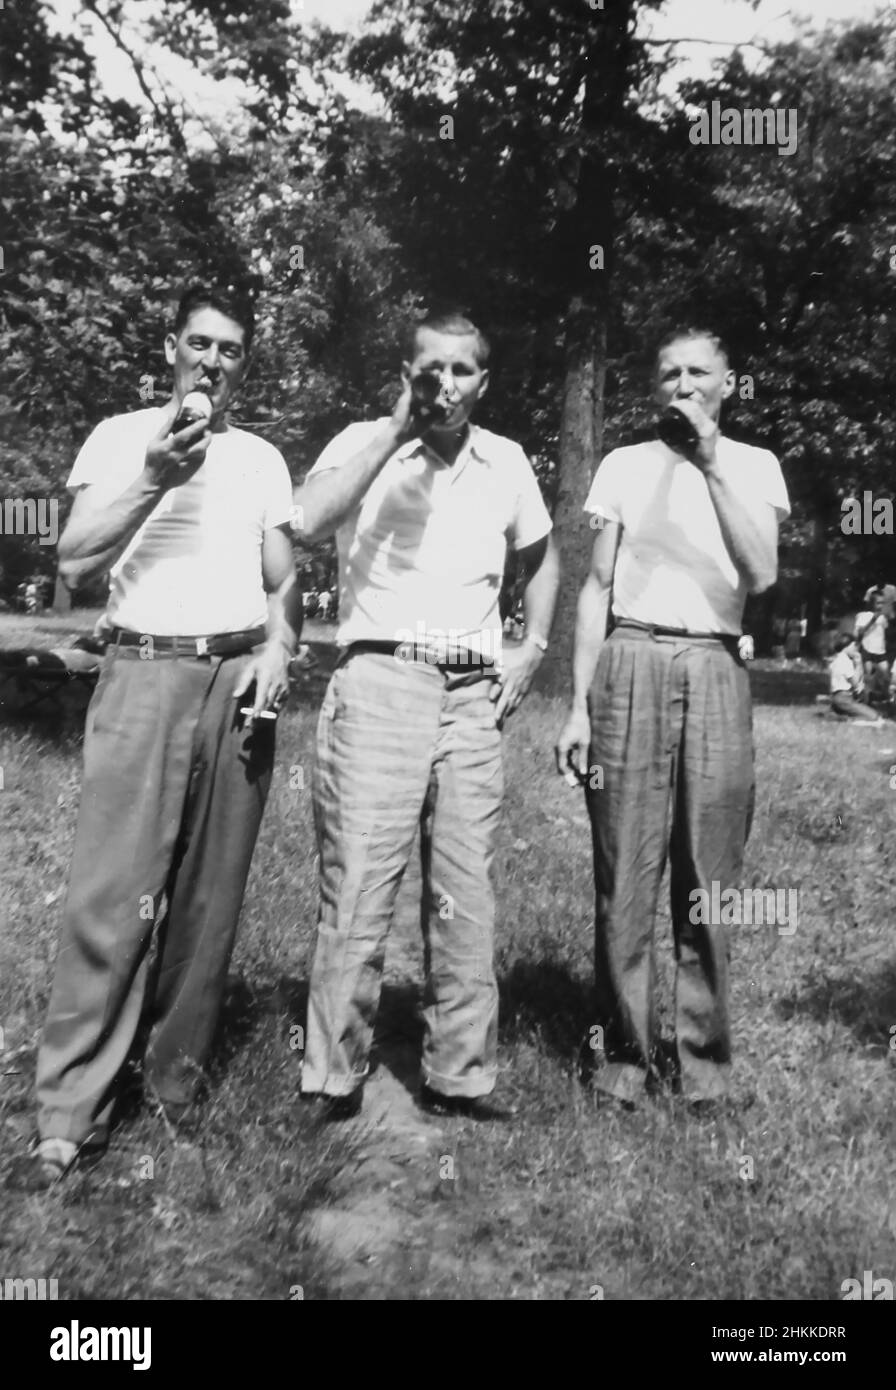 Three men drink from beer bottles, ca. 1950. Stock Photo